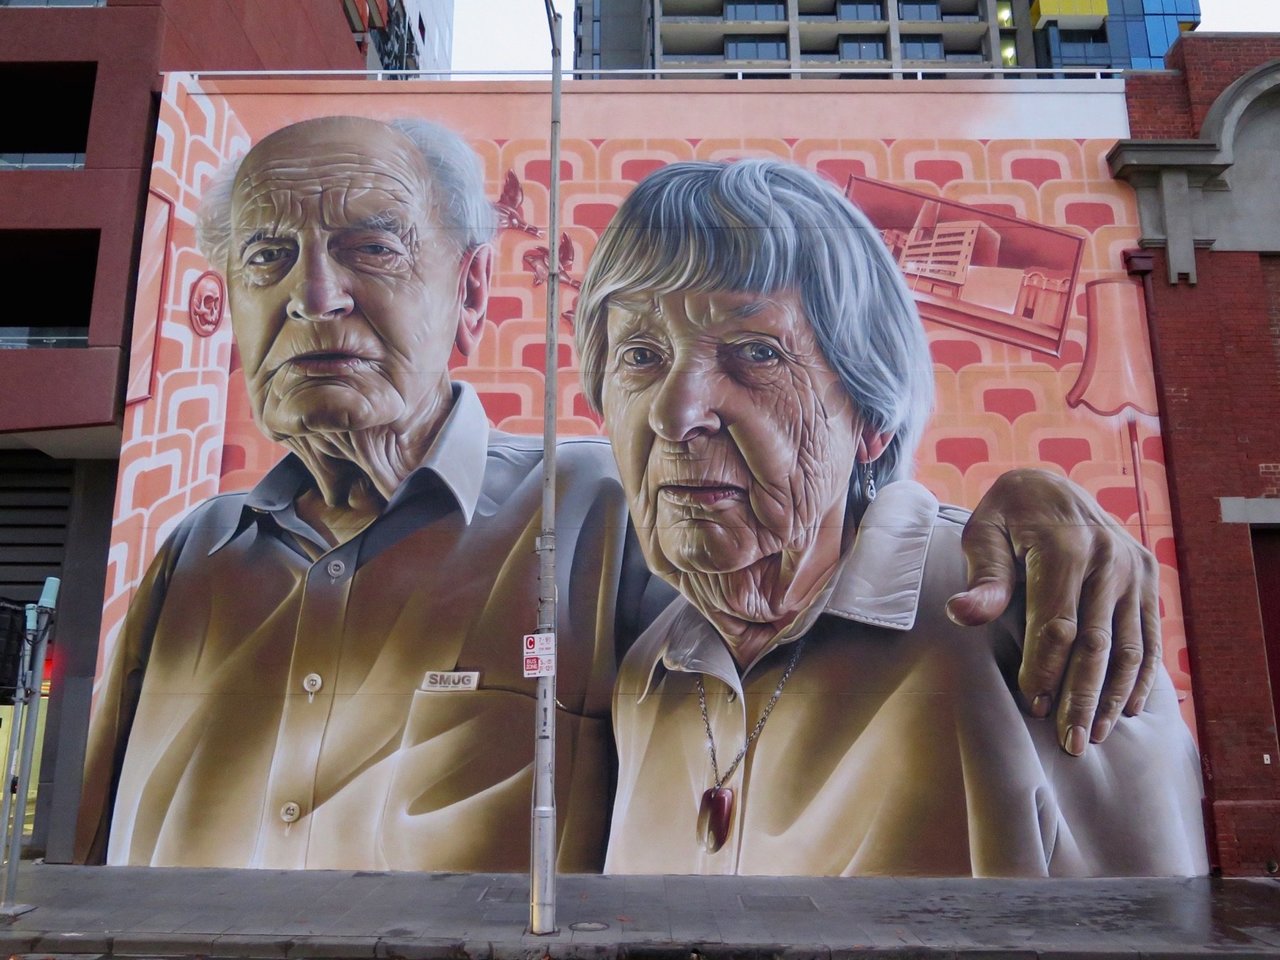 "Grandparents" by Smug in Melbourne #streetart http://www.streetartnews.net/2016/06/grandparents-by-smug-in-melbourne.html https://t.co/L1jzULkfji